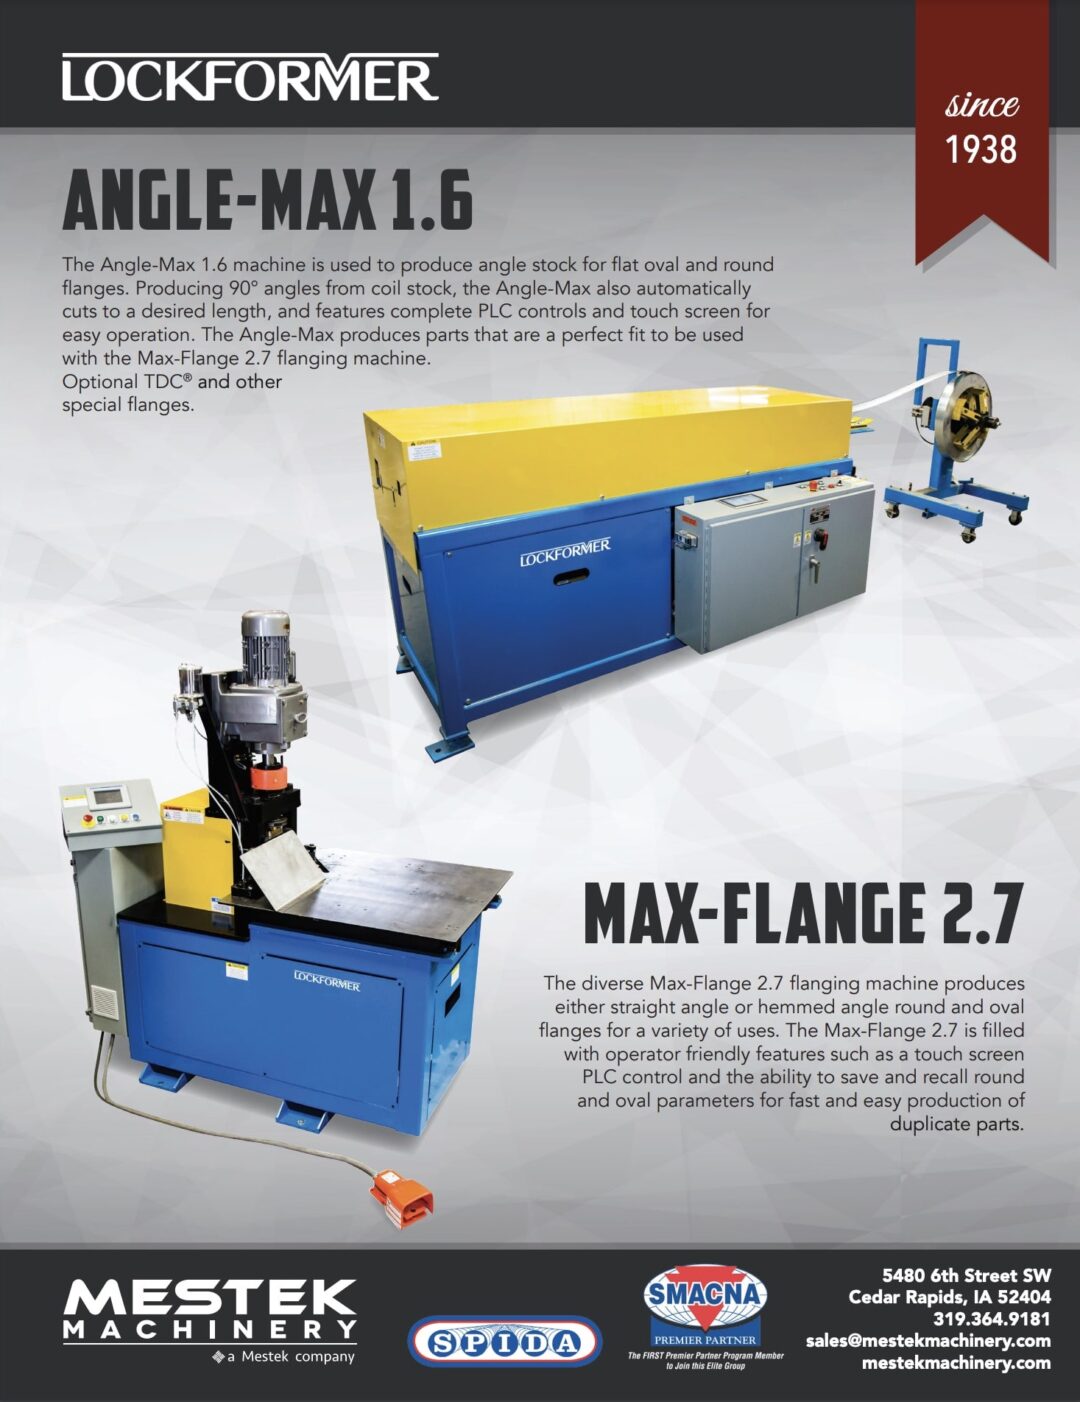 Brochure: Lockformer Angler 1.6 Machine and Flanger 2.7 Flanging Machine